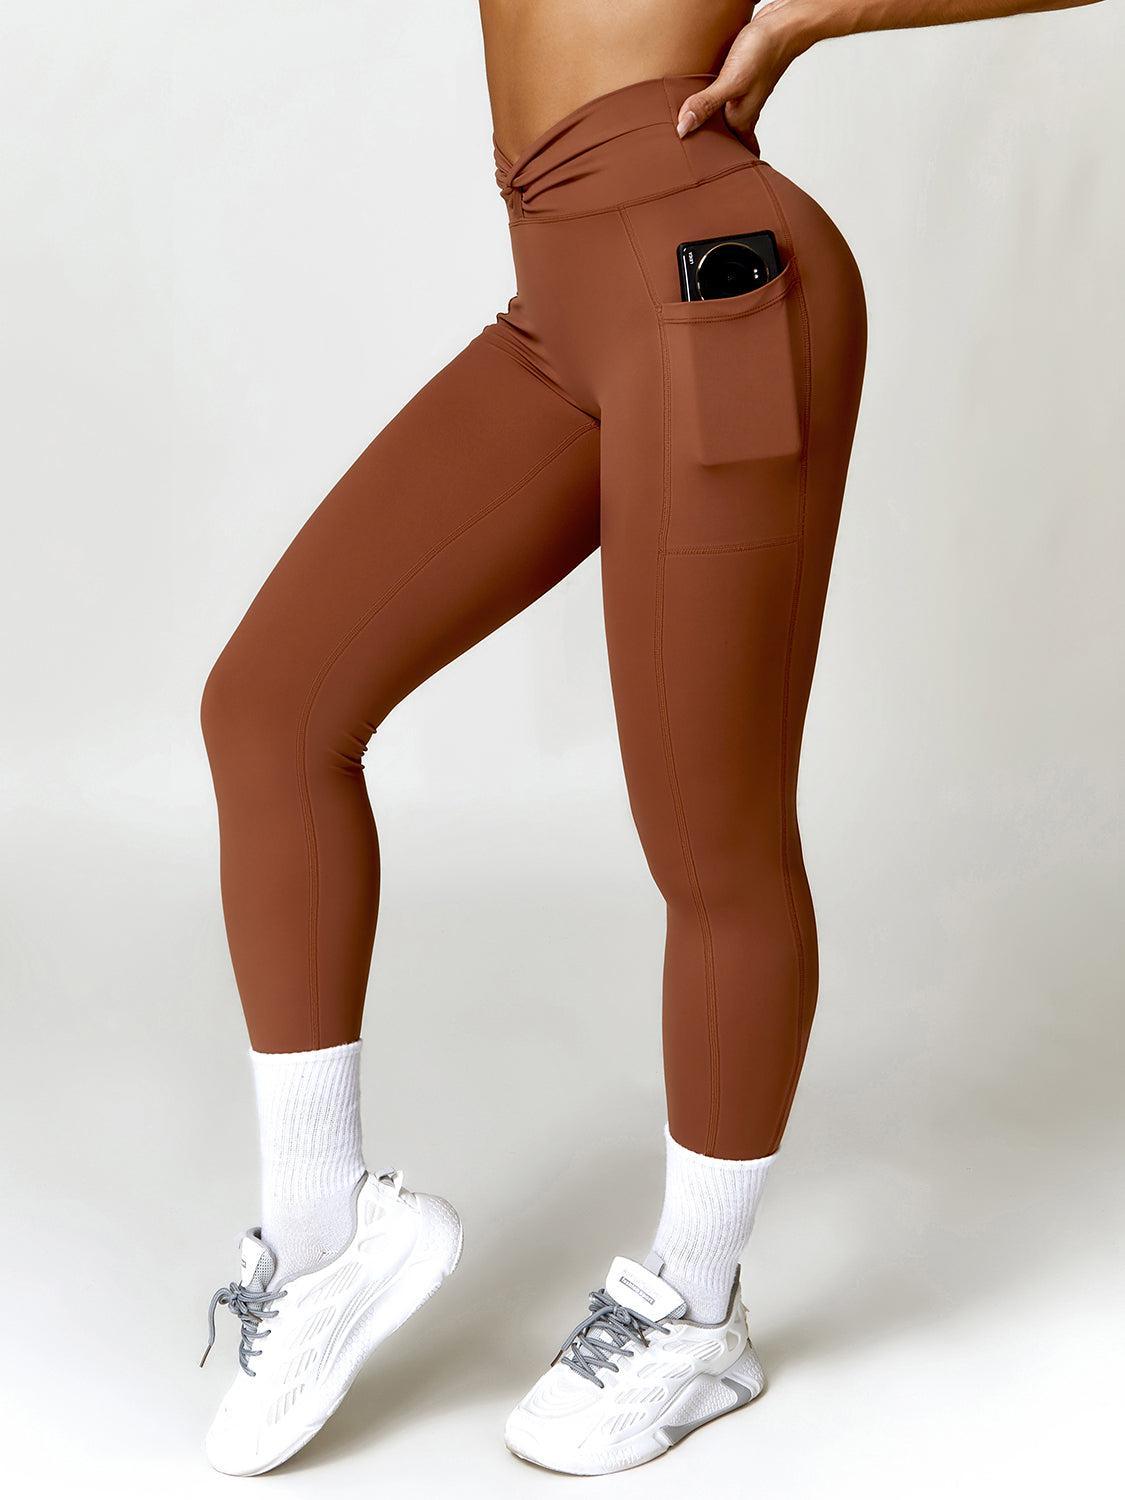 a woman wearing a pair of brown leggings